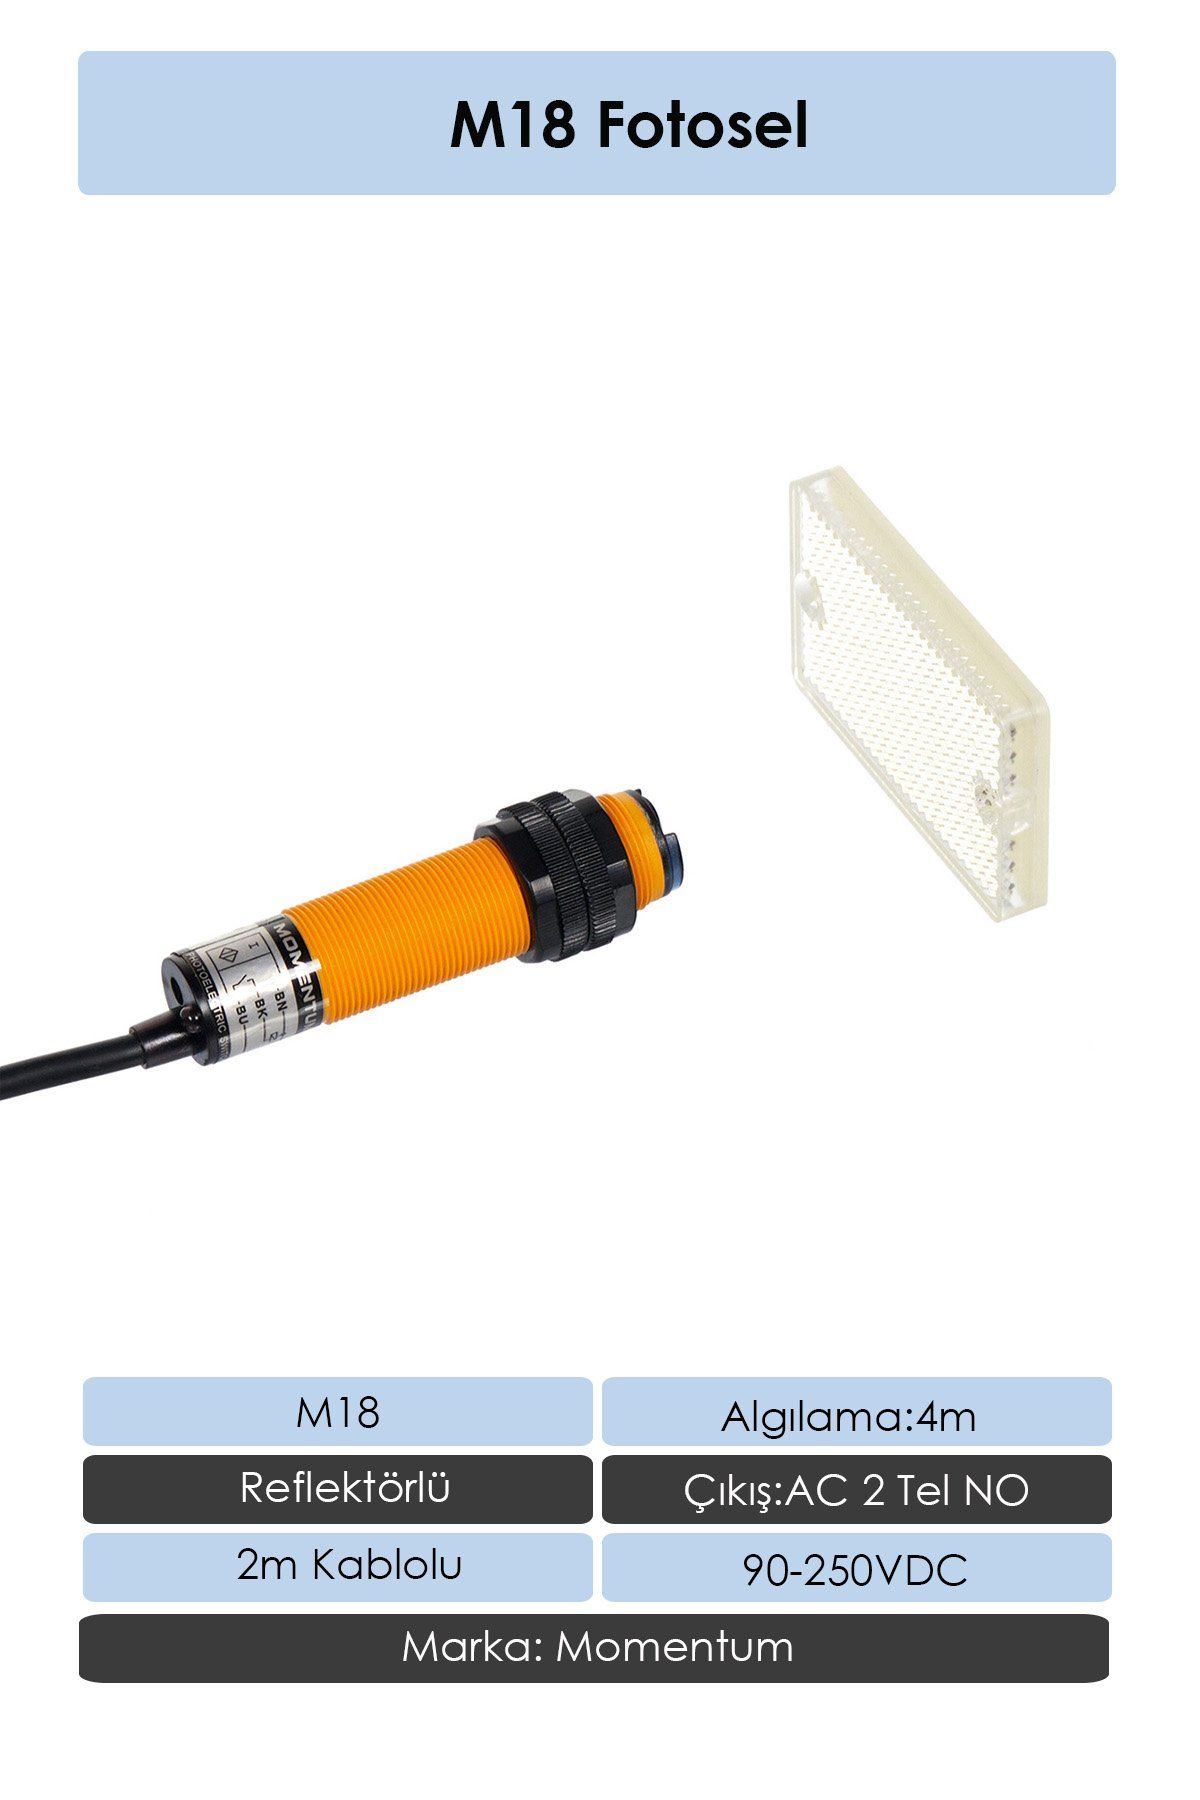 Momentum Fotosel M18 4m Reflektörlü 2m Kablo AC 2 Tel NO G18-2B4A